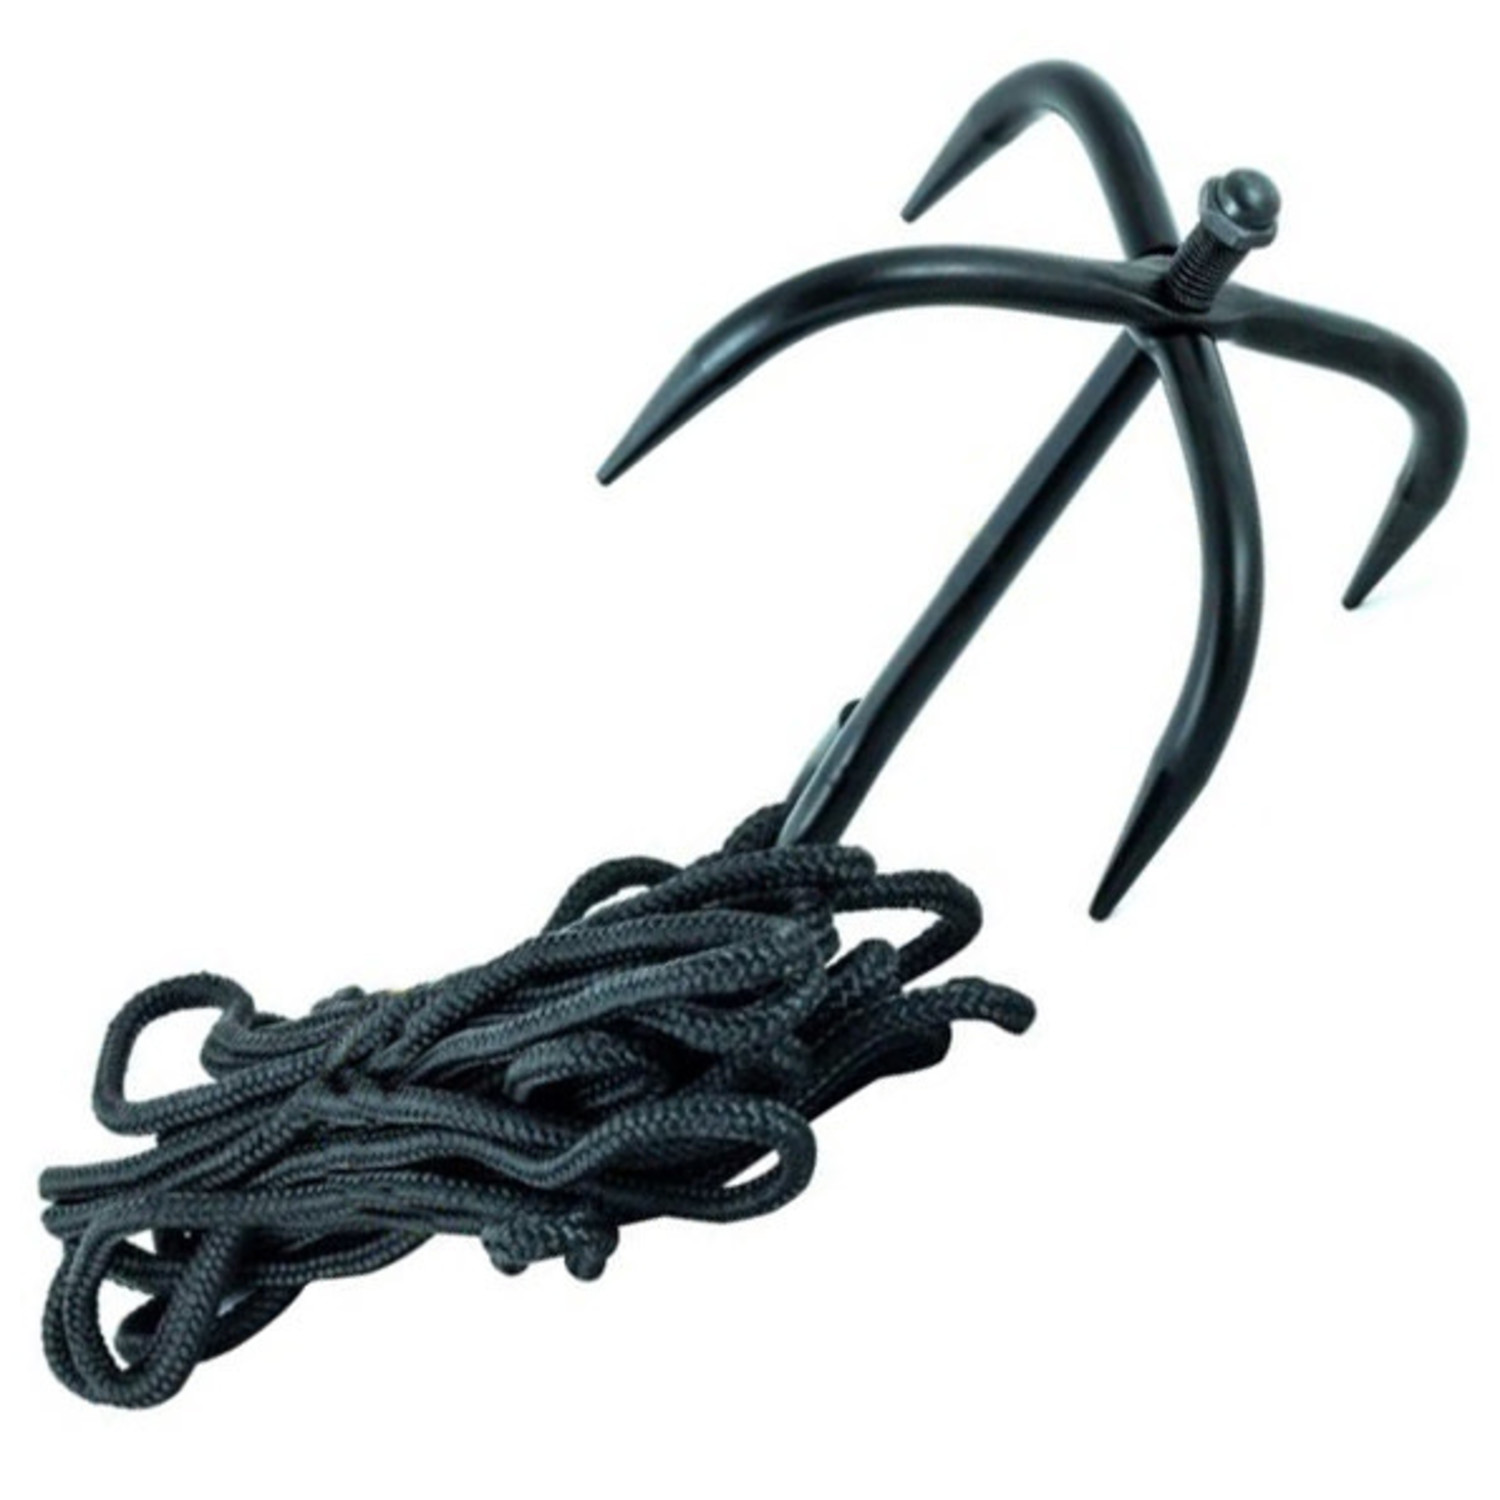 BladesUSA 5001 Ninja Grappling Hook, Targets & Accessories